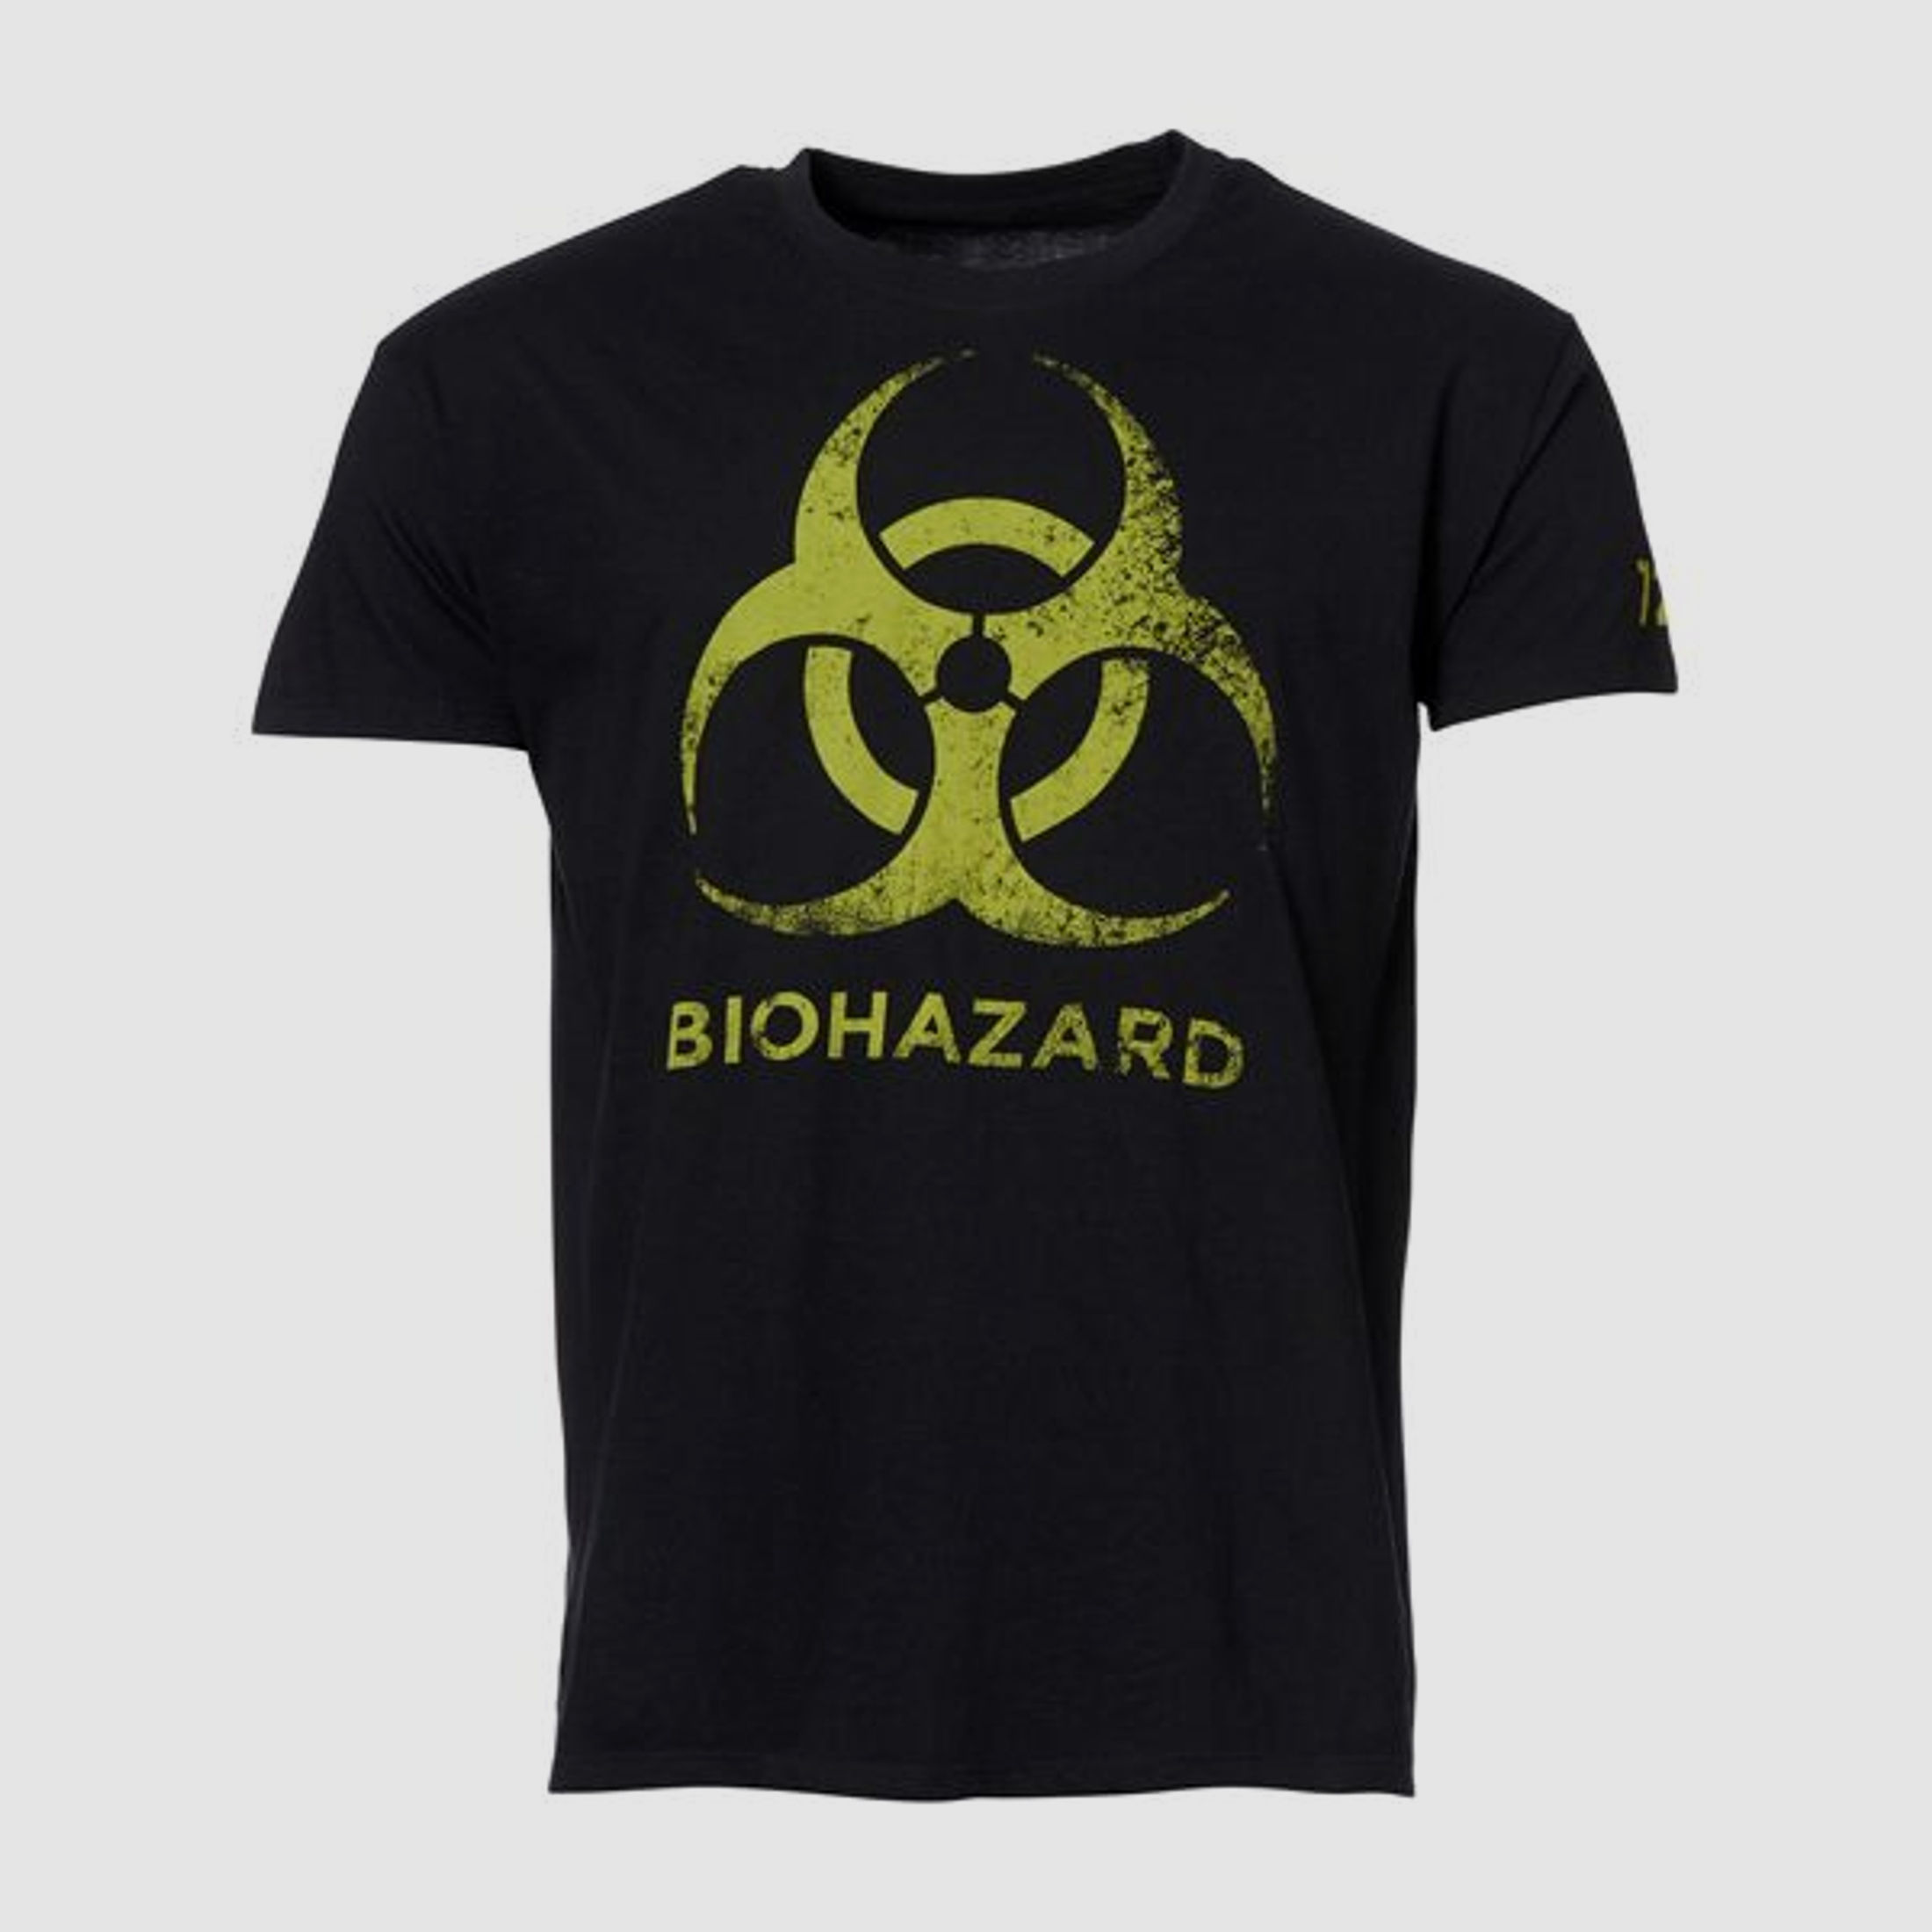 720gear 720gear T-Shirt Biohazard schwarz